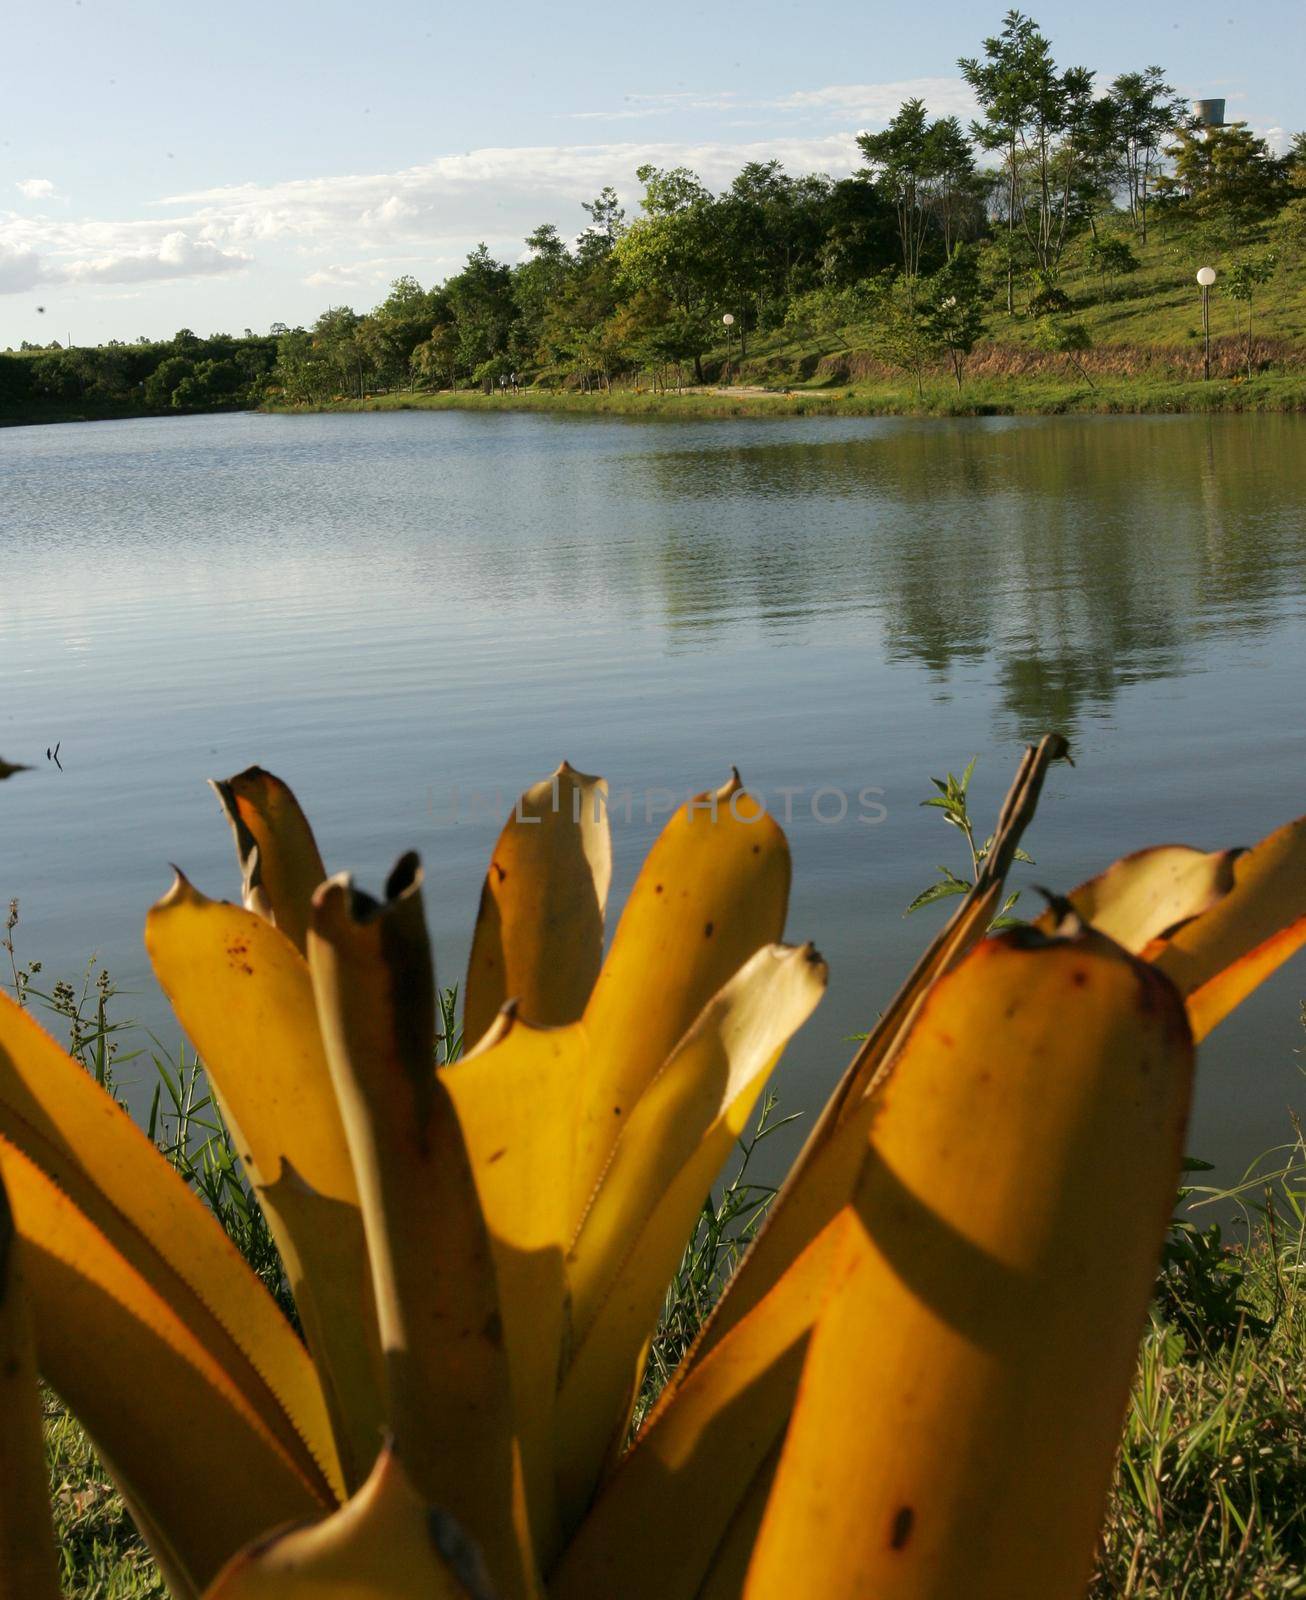 eunapolis, bahia / brazil - january 20, 2011: lake in the city of Eunapolis, in southern Bahia.


